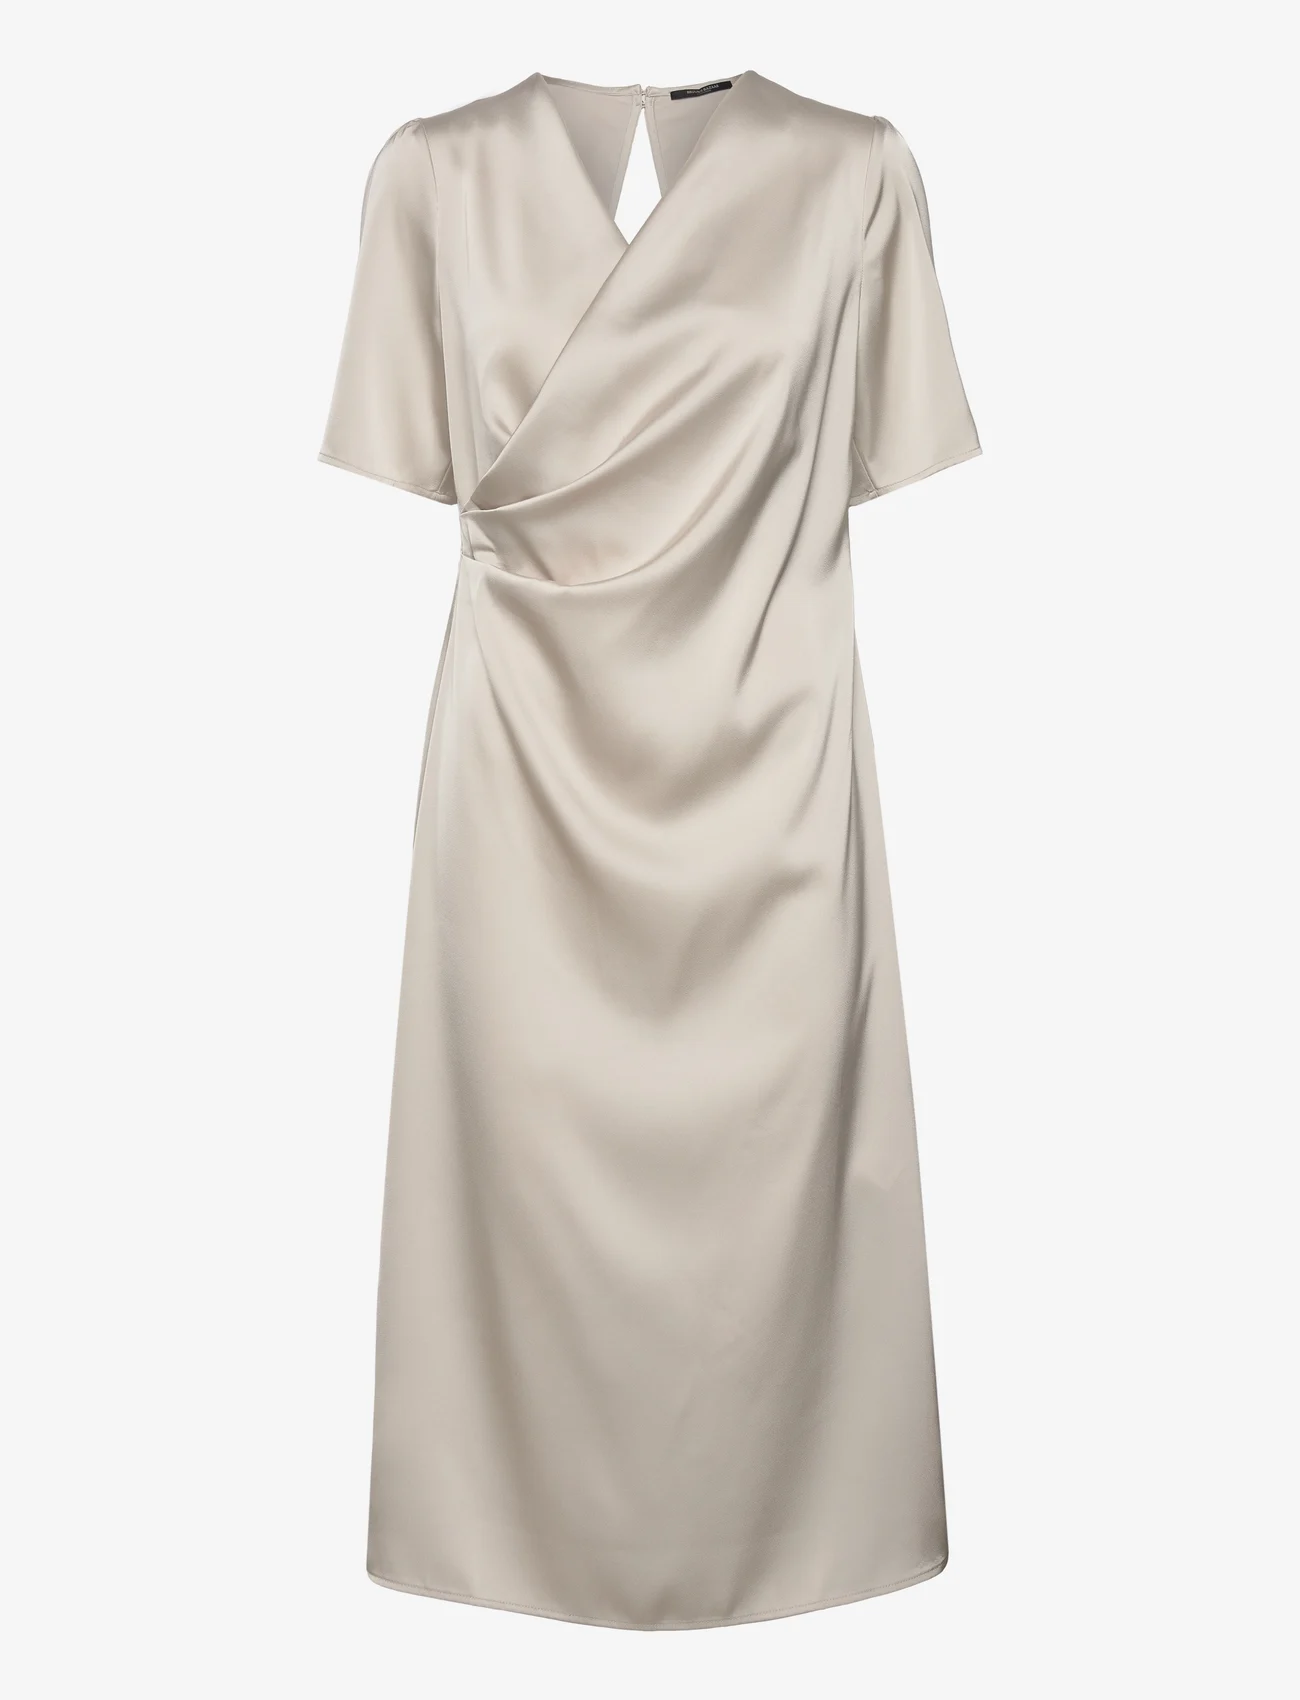 Bruuns Bazaar - RaisellasBBNemi dress - midi dresses - light grey - 0